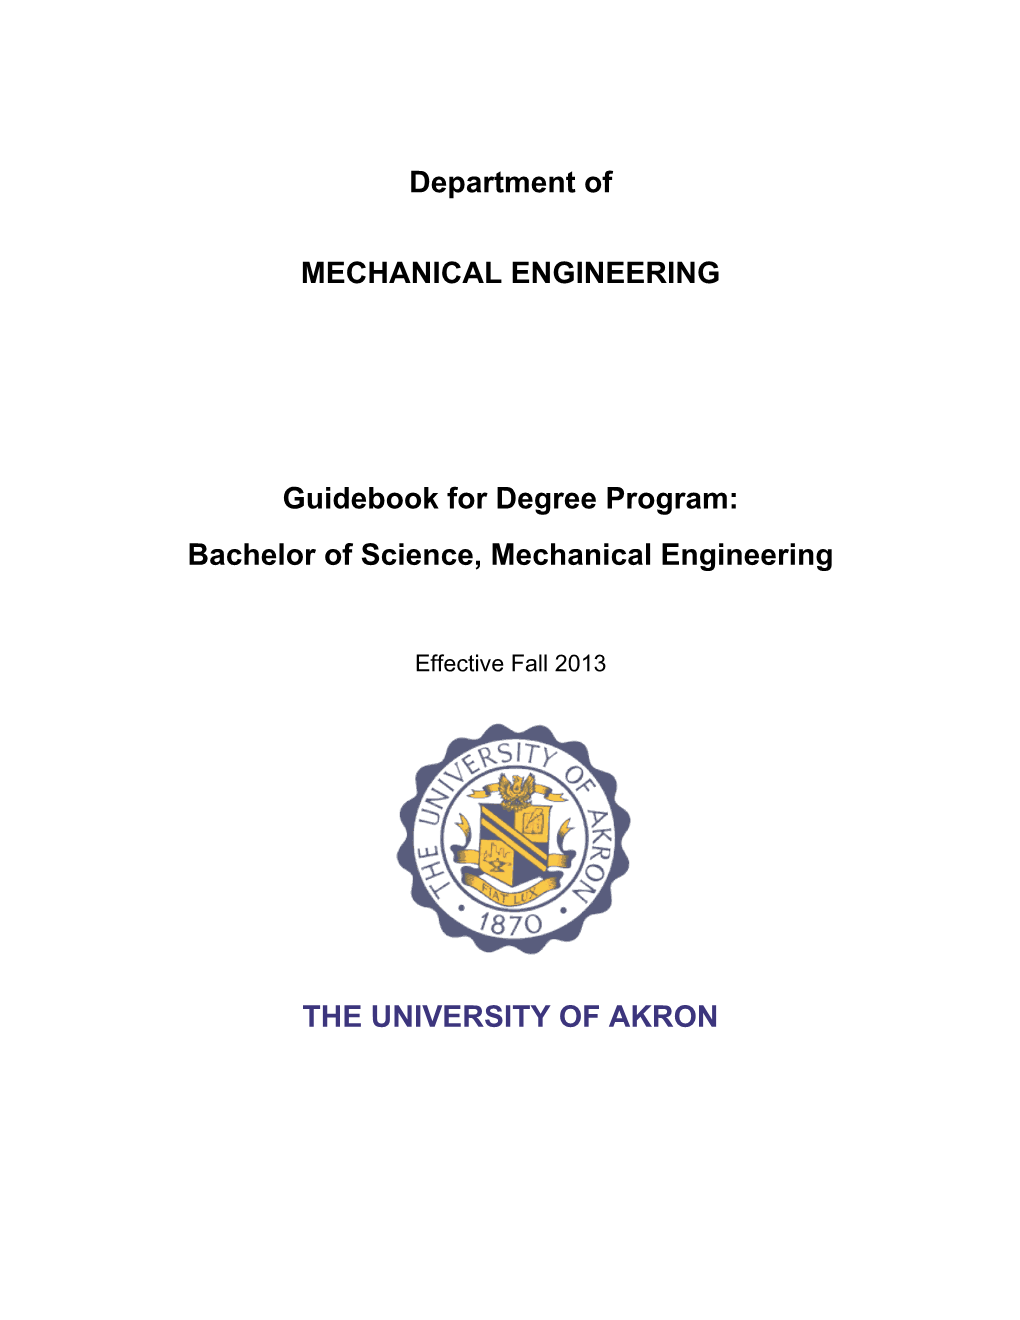 Guidebook for Degree Program